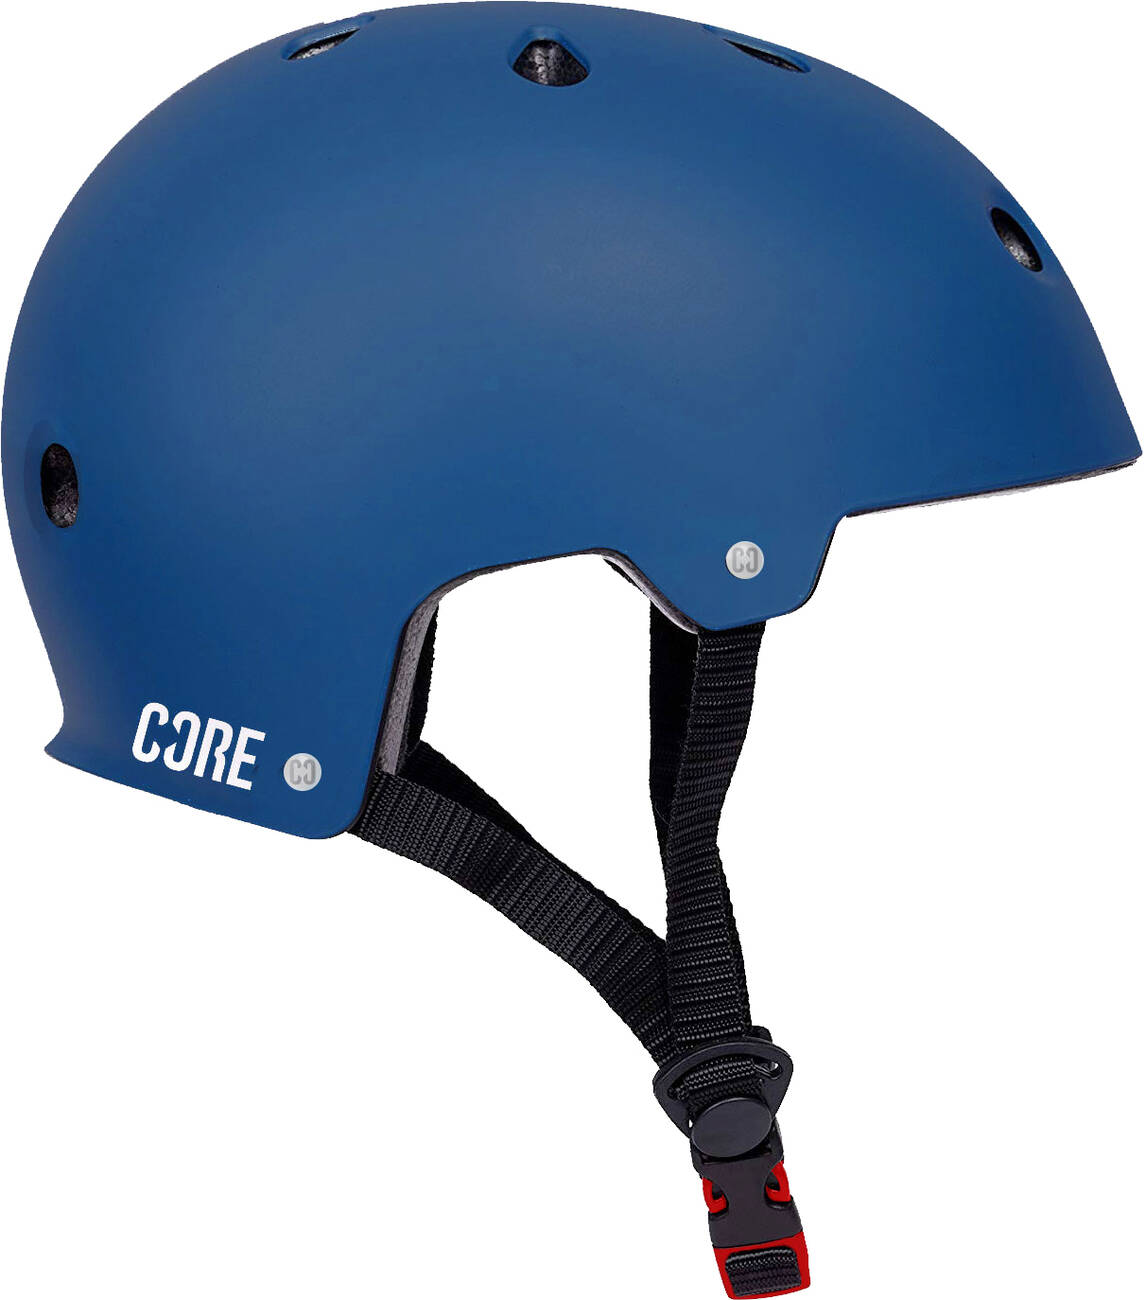 CORE Action Sports helmet skate and bike helmet navy blue